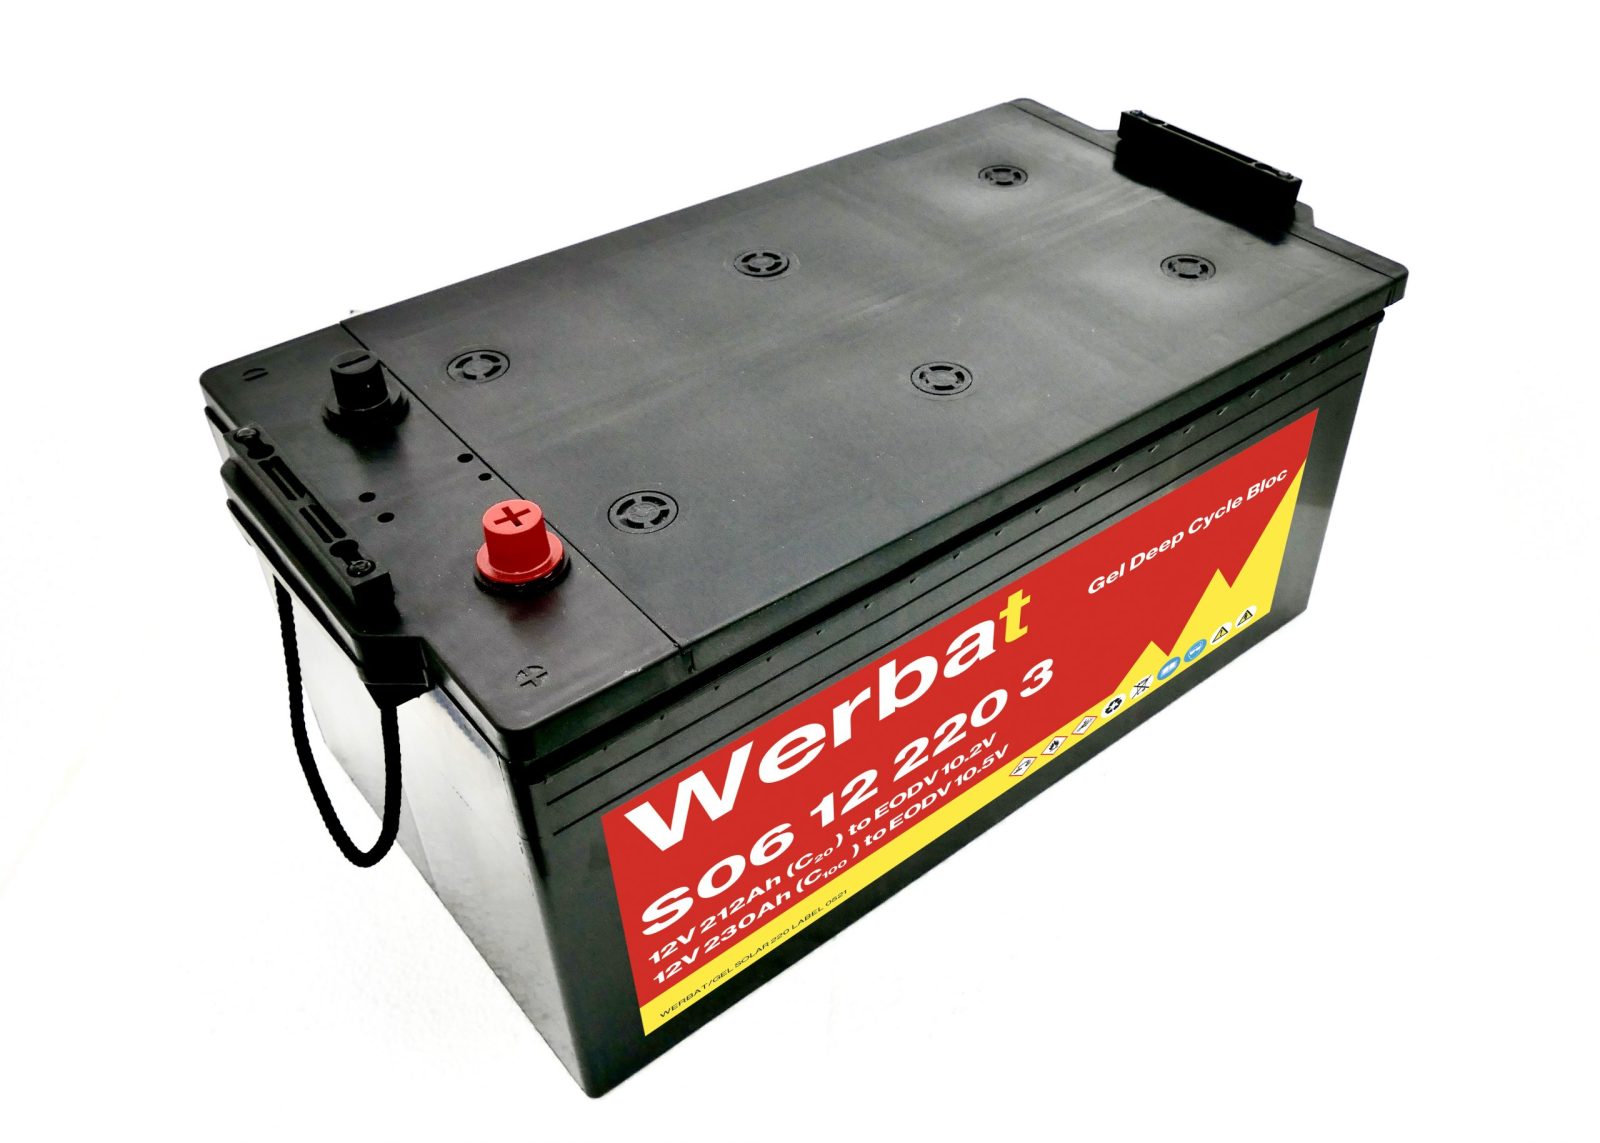 12V 100AH GSL Lifepo4 Lithium Ion Battery - PSC SOLAR UK